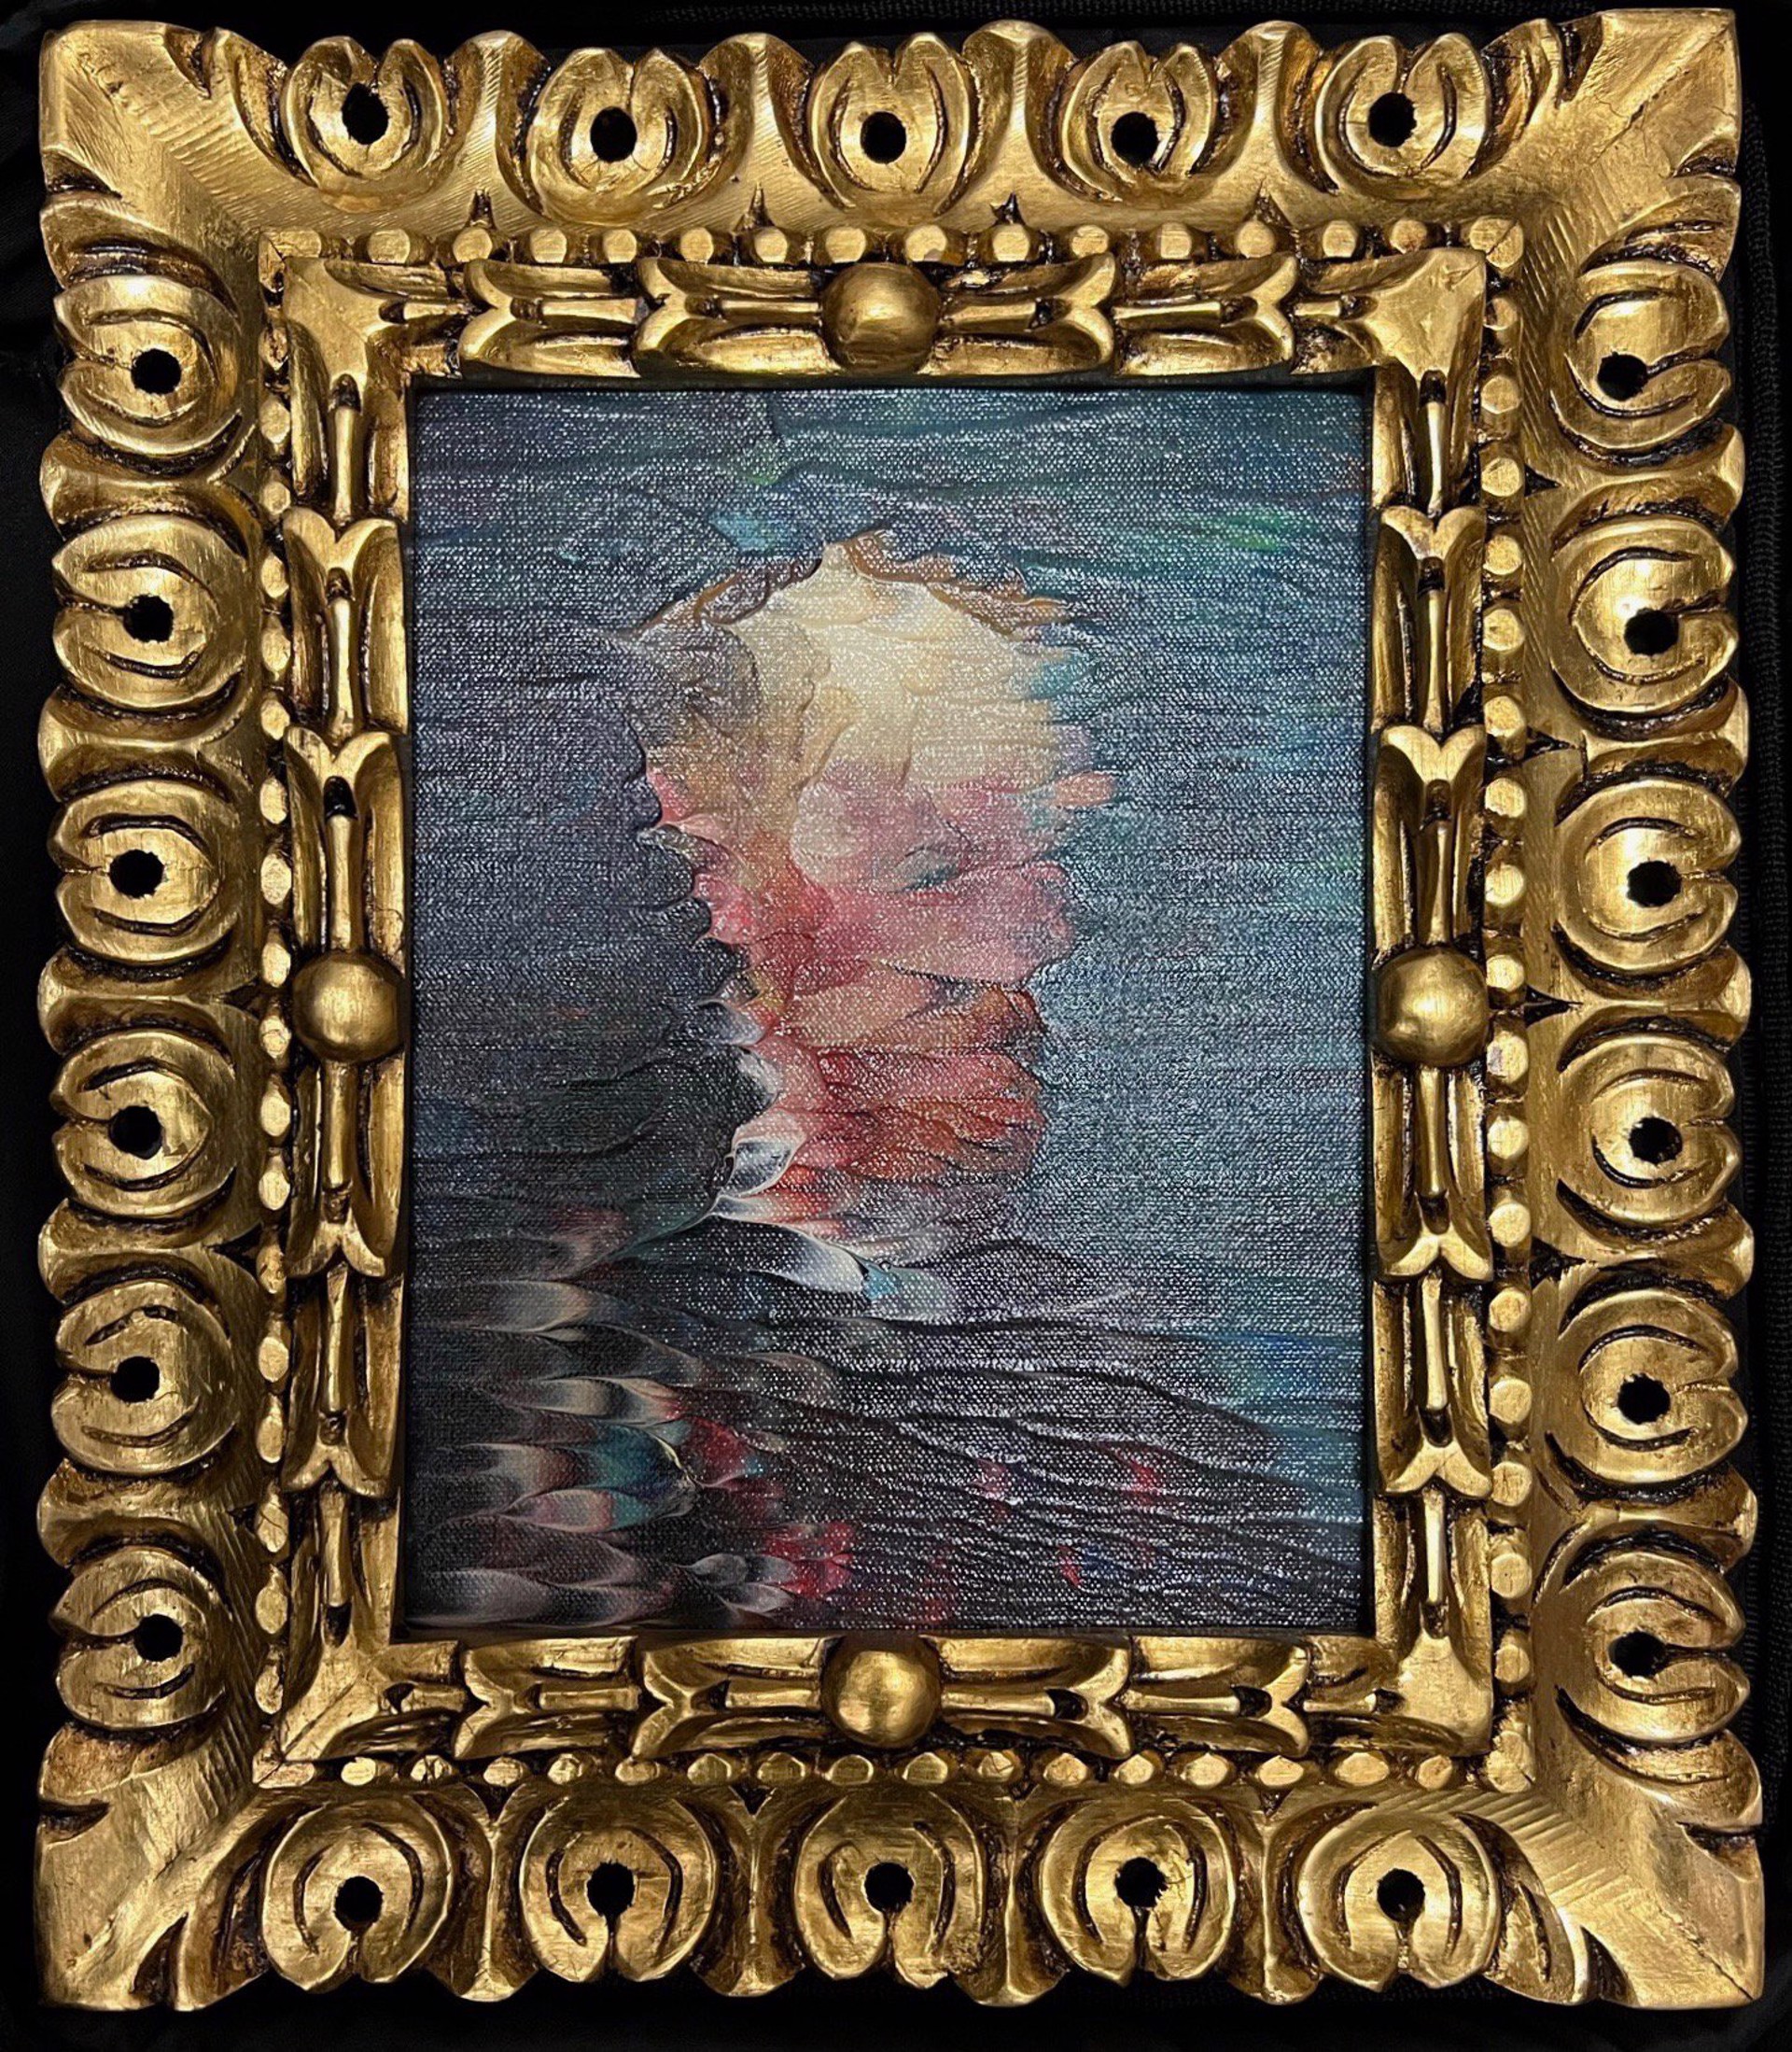 Van Gogh Tribute by Alex Sastoque